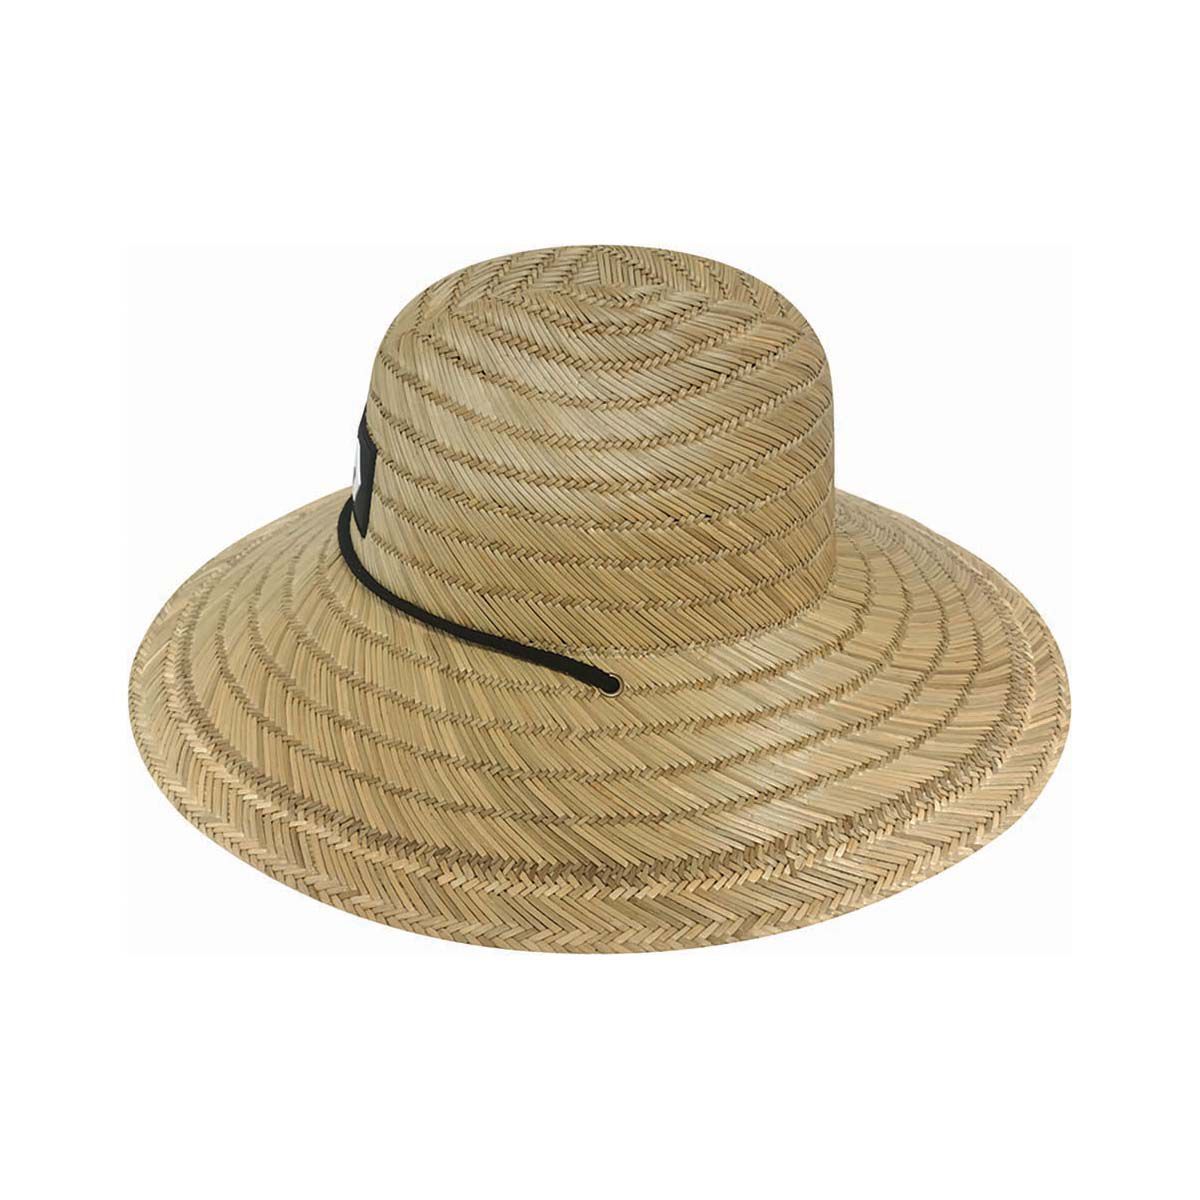 Daiwa Men's Straw Hat Natural, , bcf_hi-res